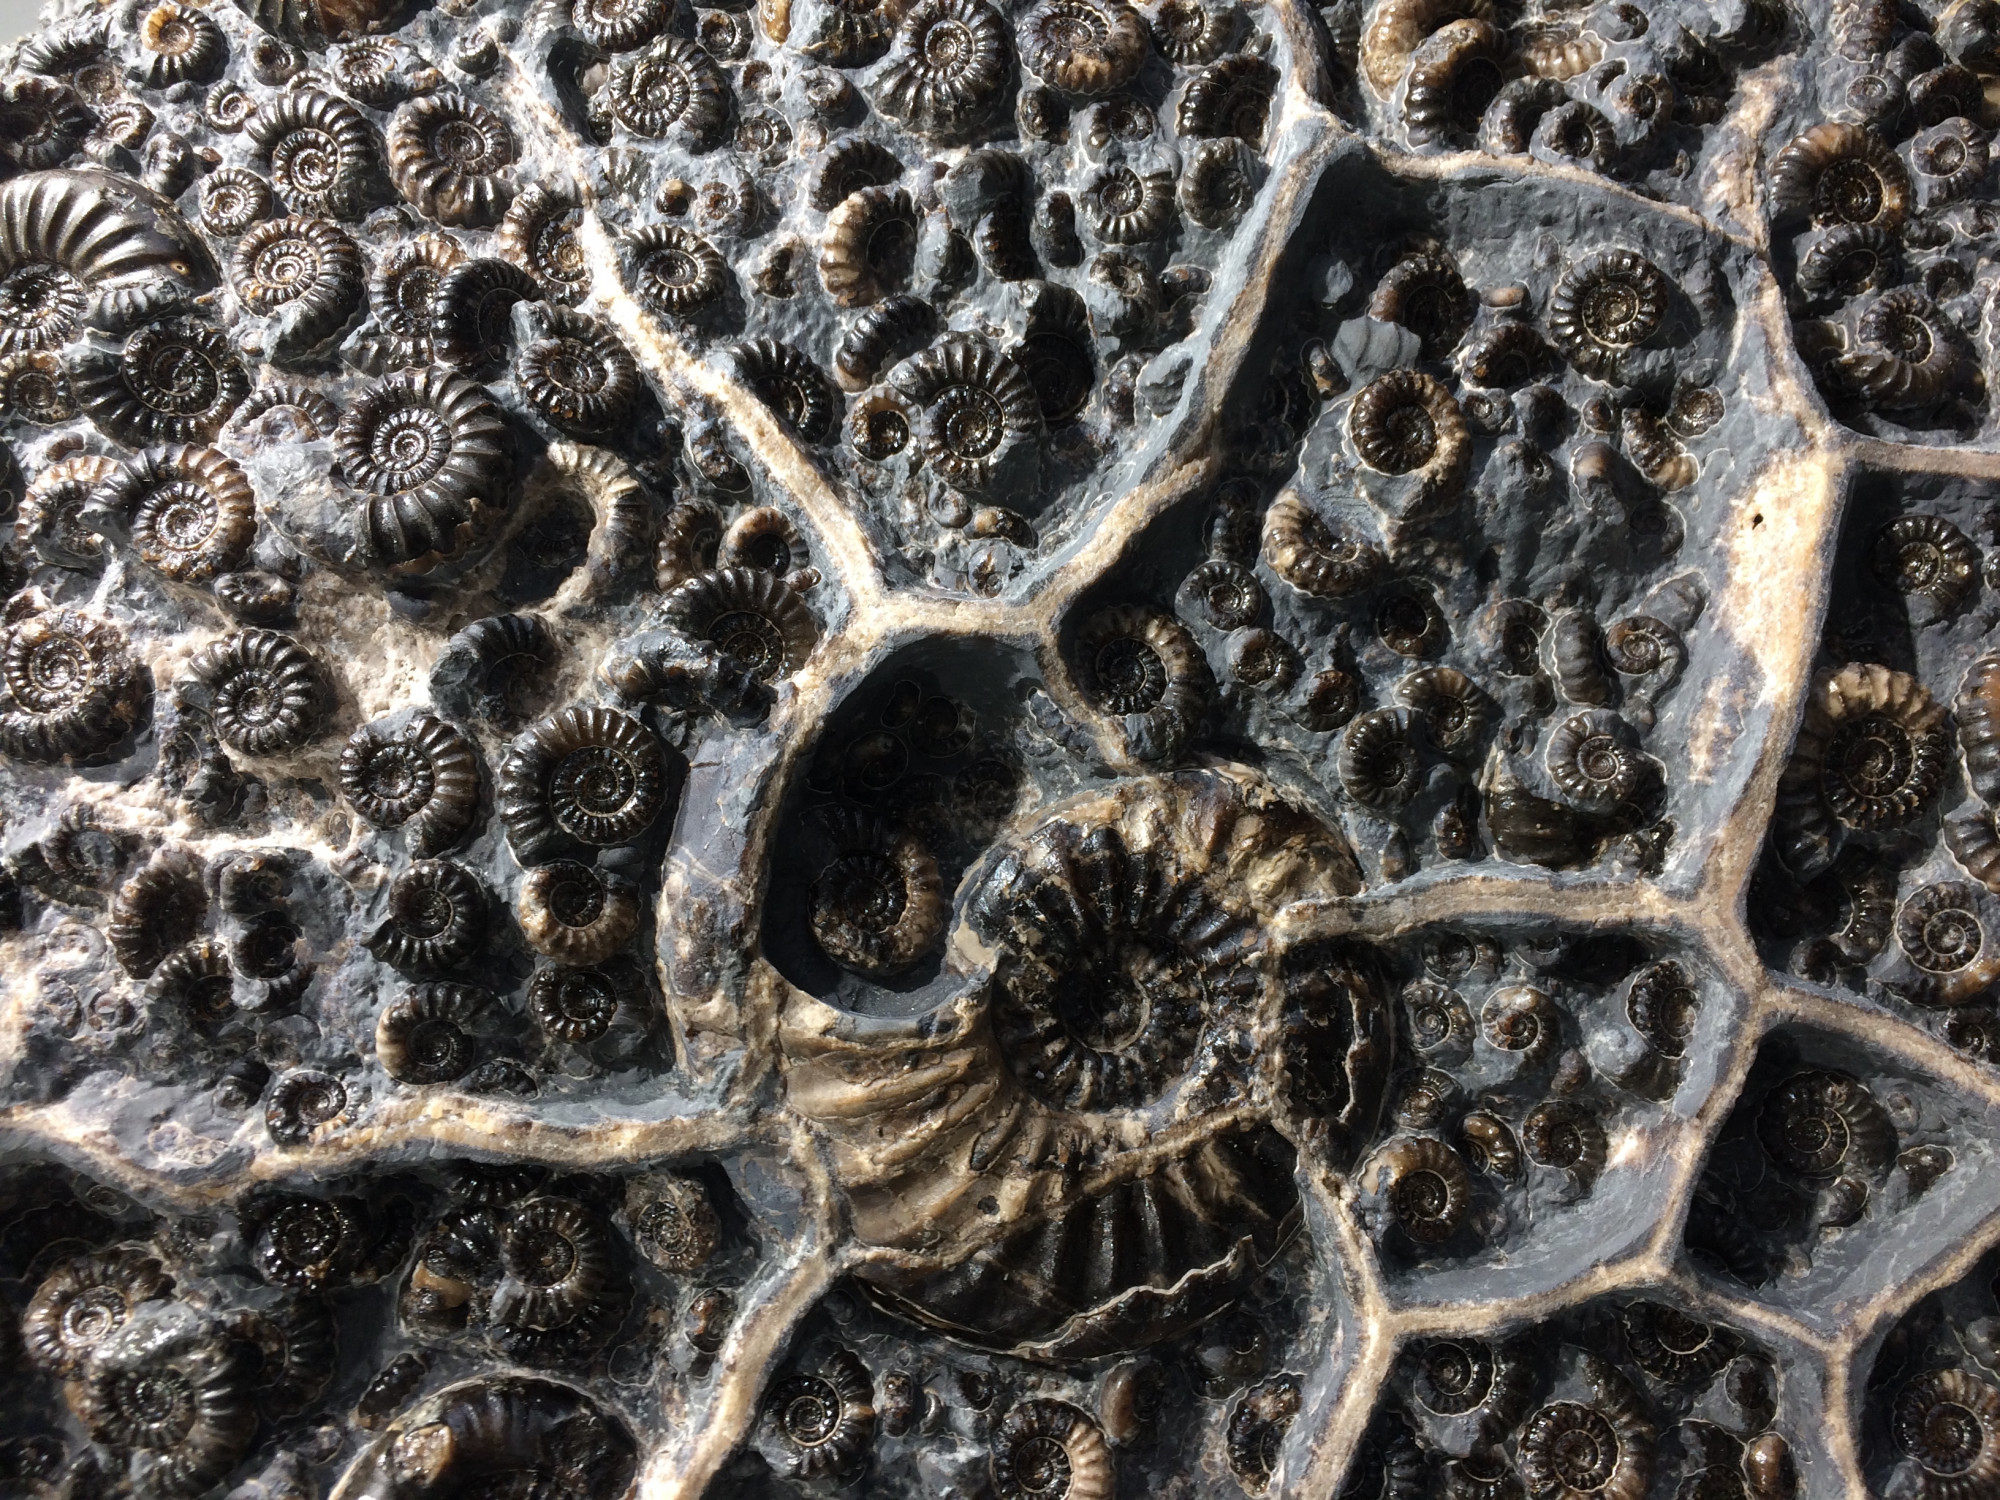 Ammonites from England - Fossil art